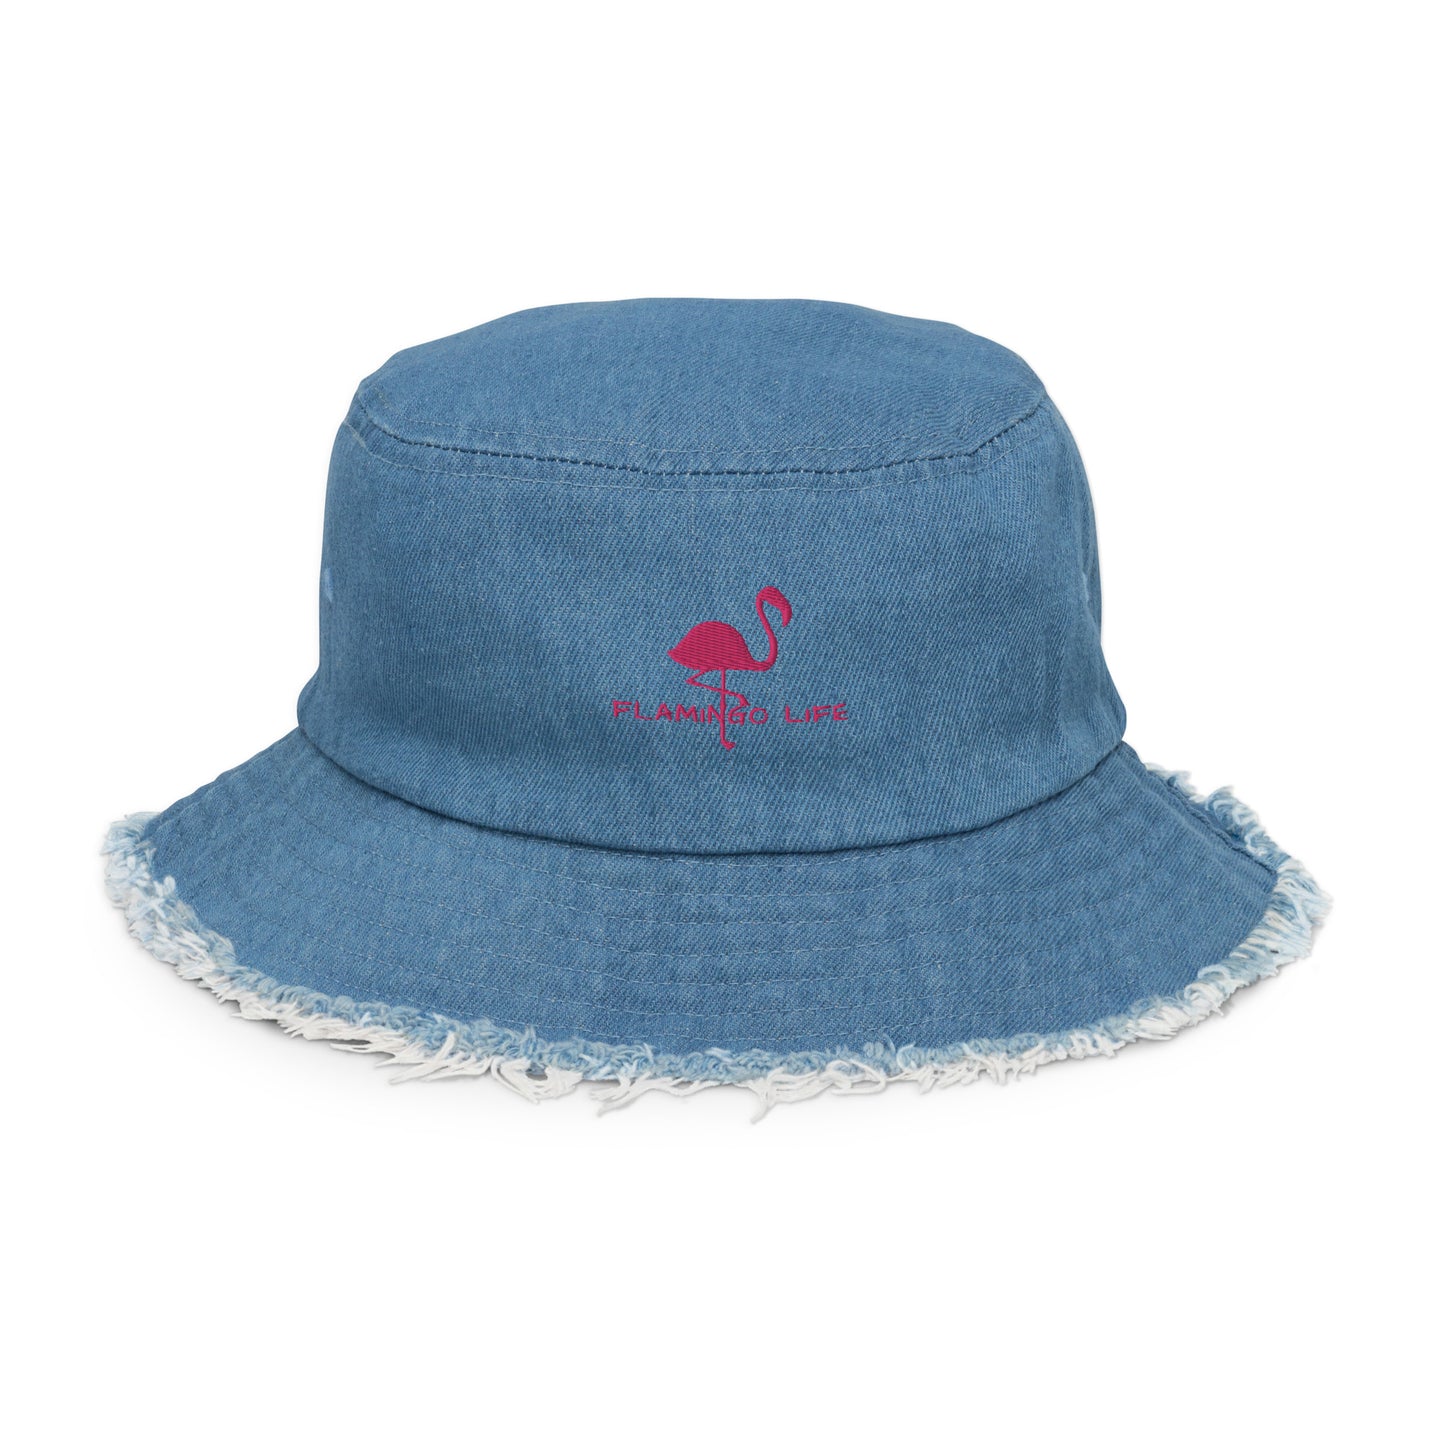 Flamingo Life® Embroidered Distressed Denim Bucket Hat (4 styles)